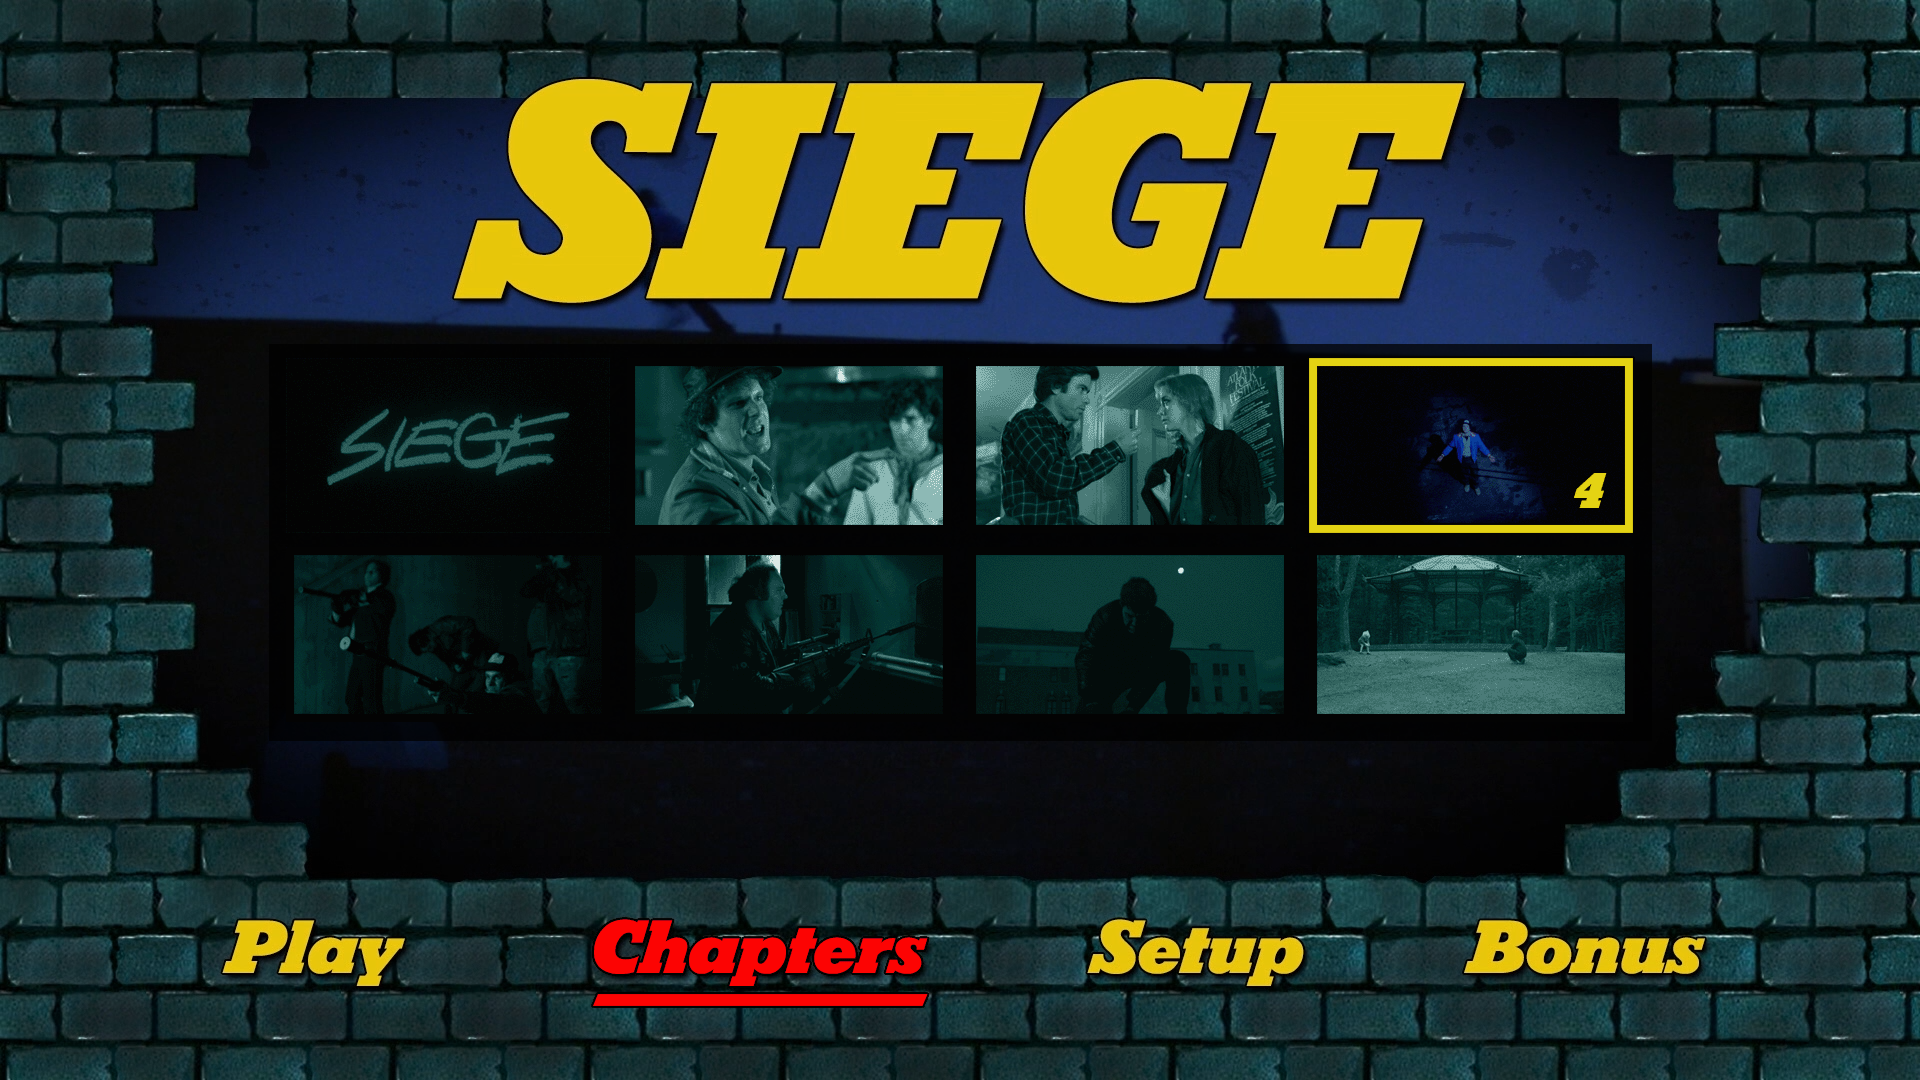 Siege scene select menu